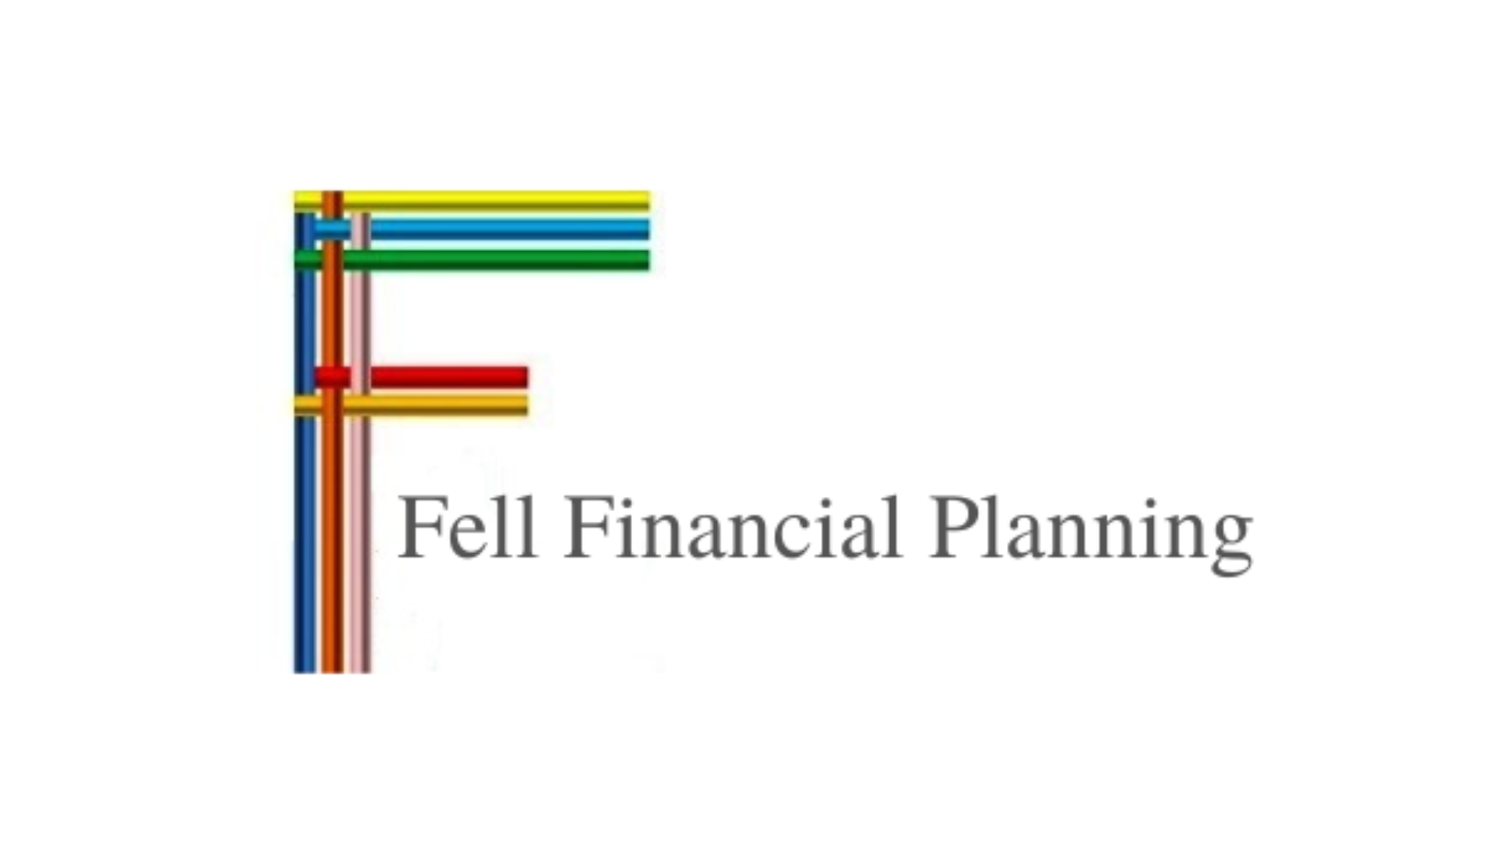 Fell Financial Planning